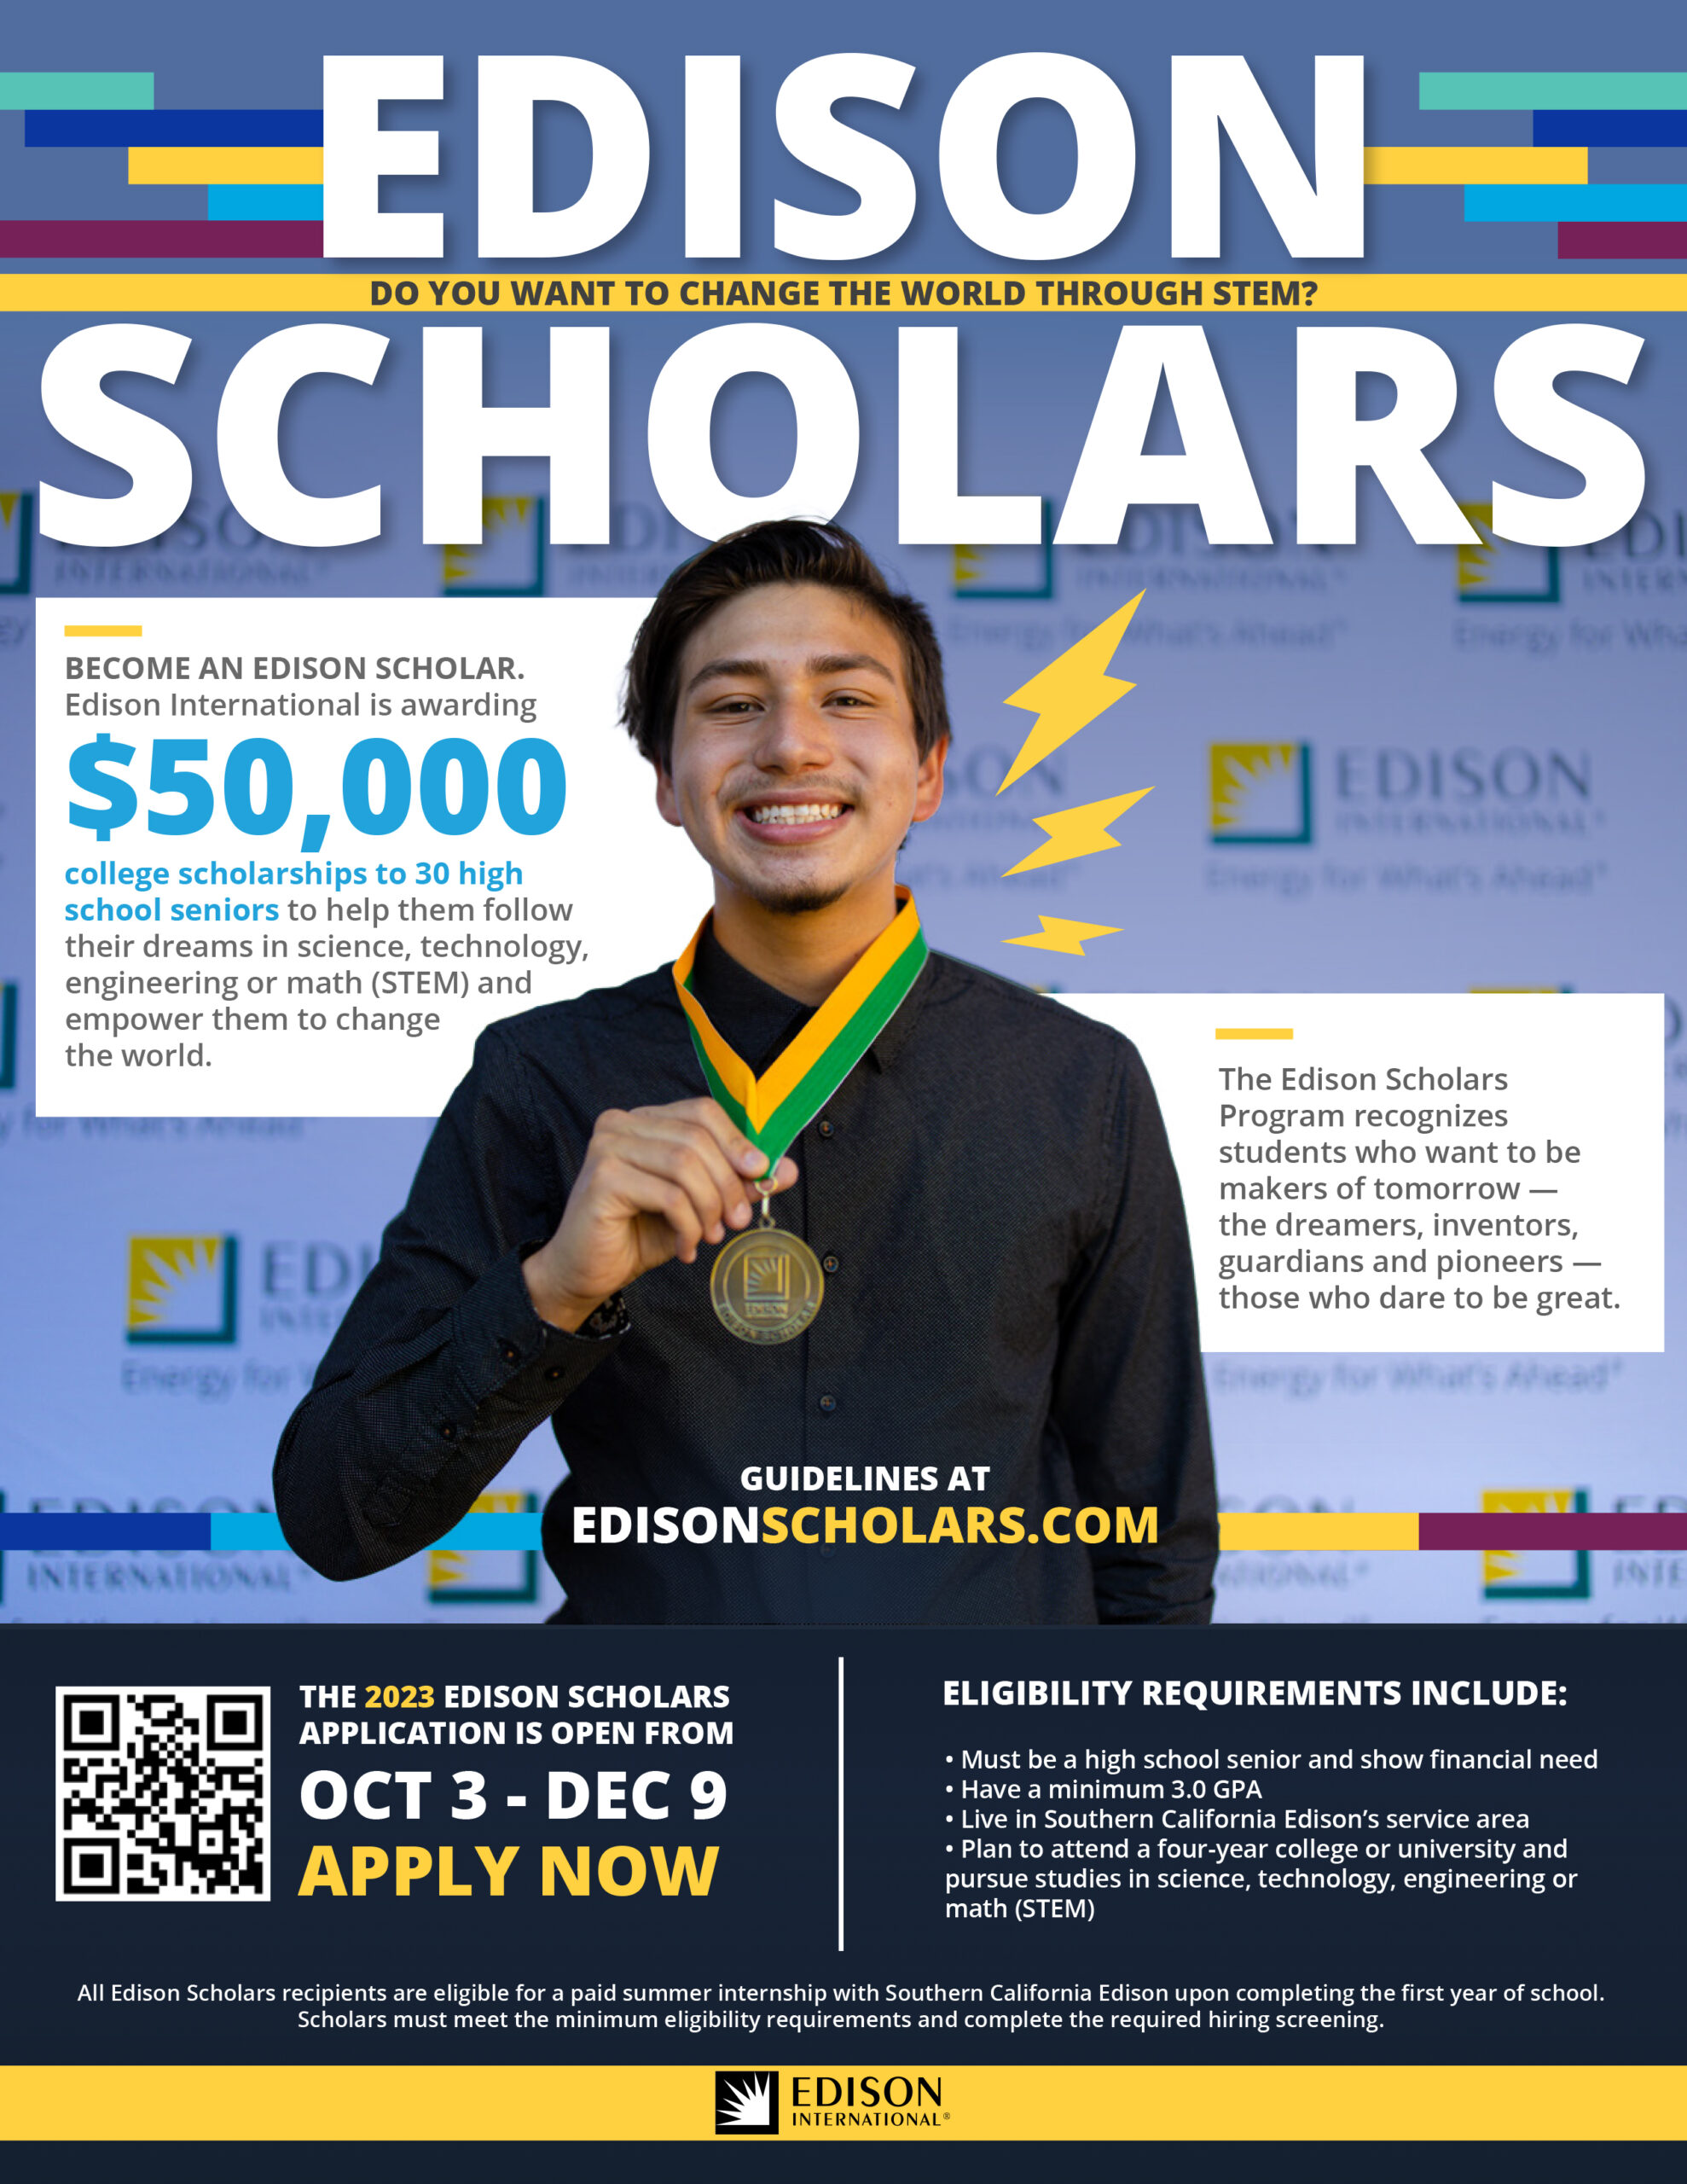 Edison Scholars program flyer showing young man wearing medal 